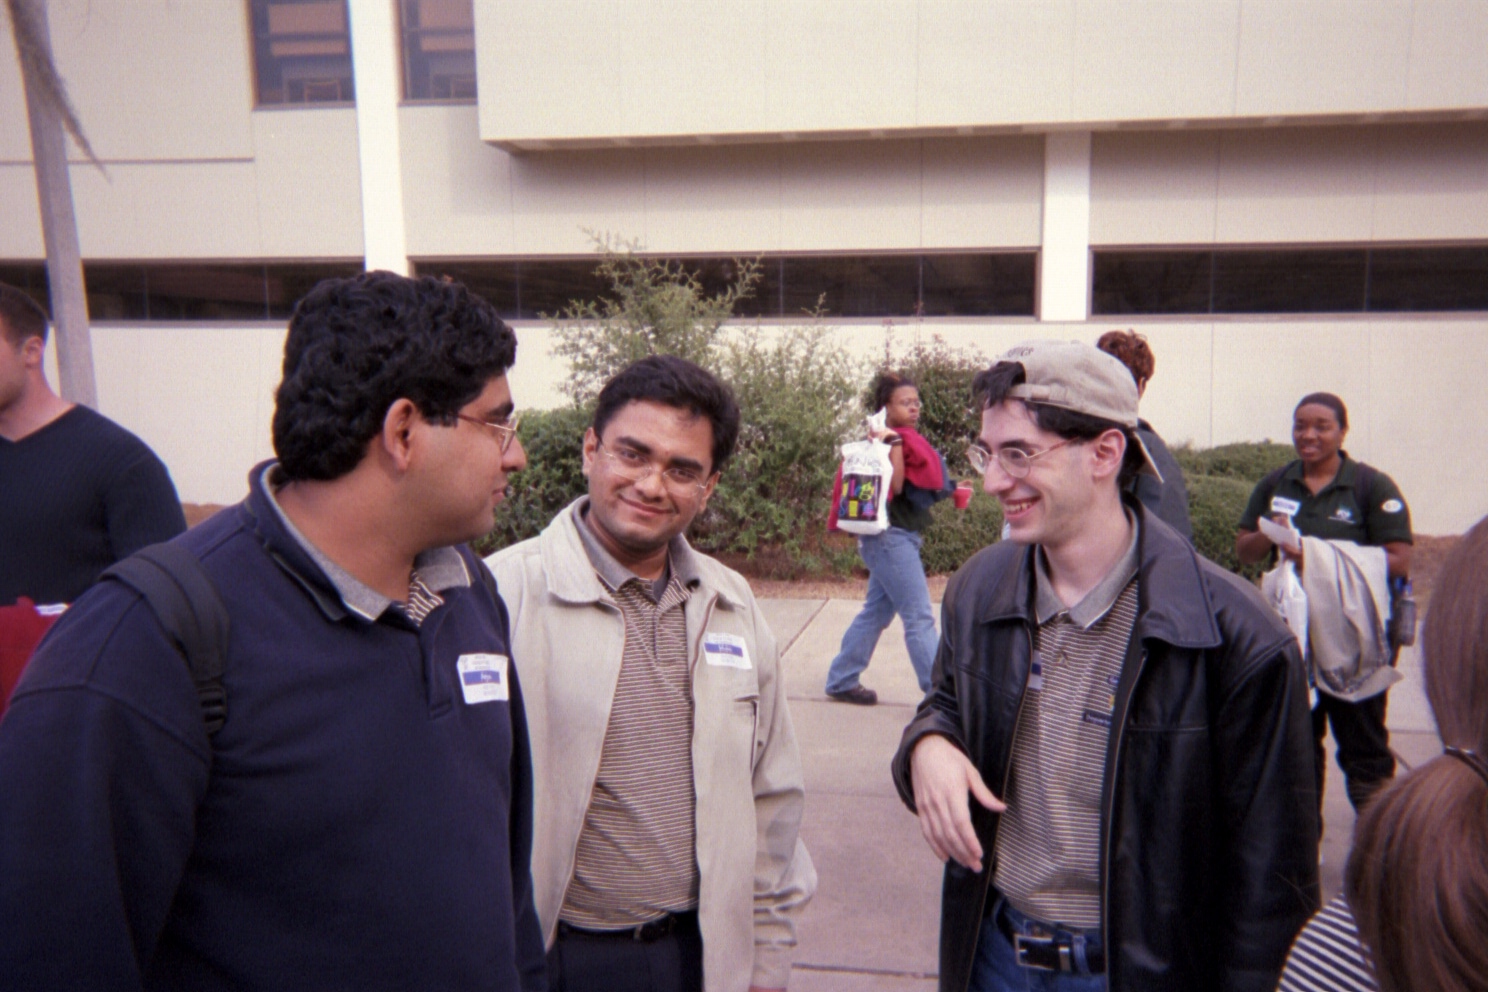 Arjun, Mubin, and Jonathan